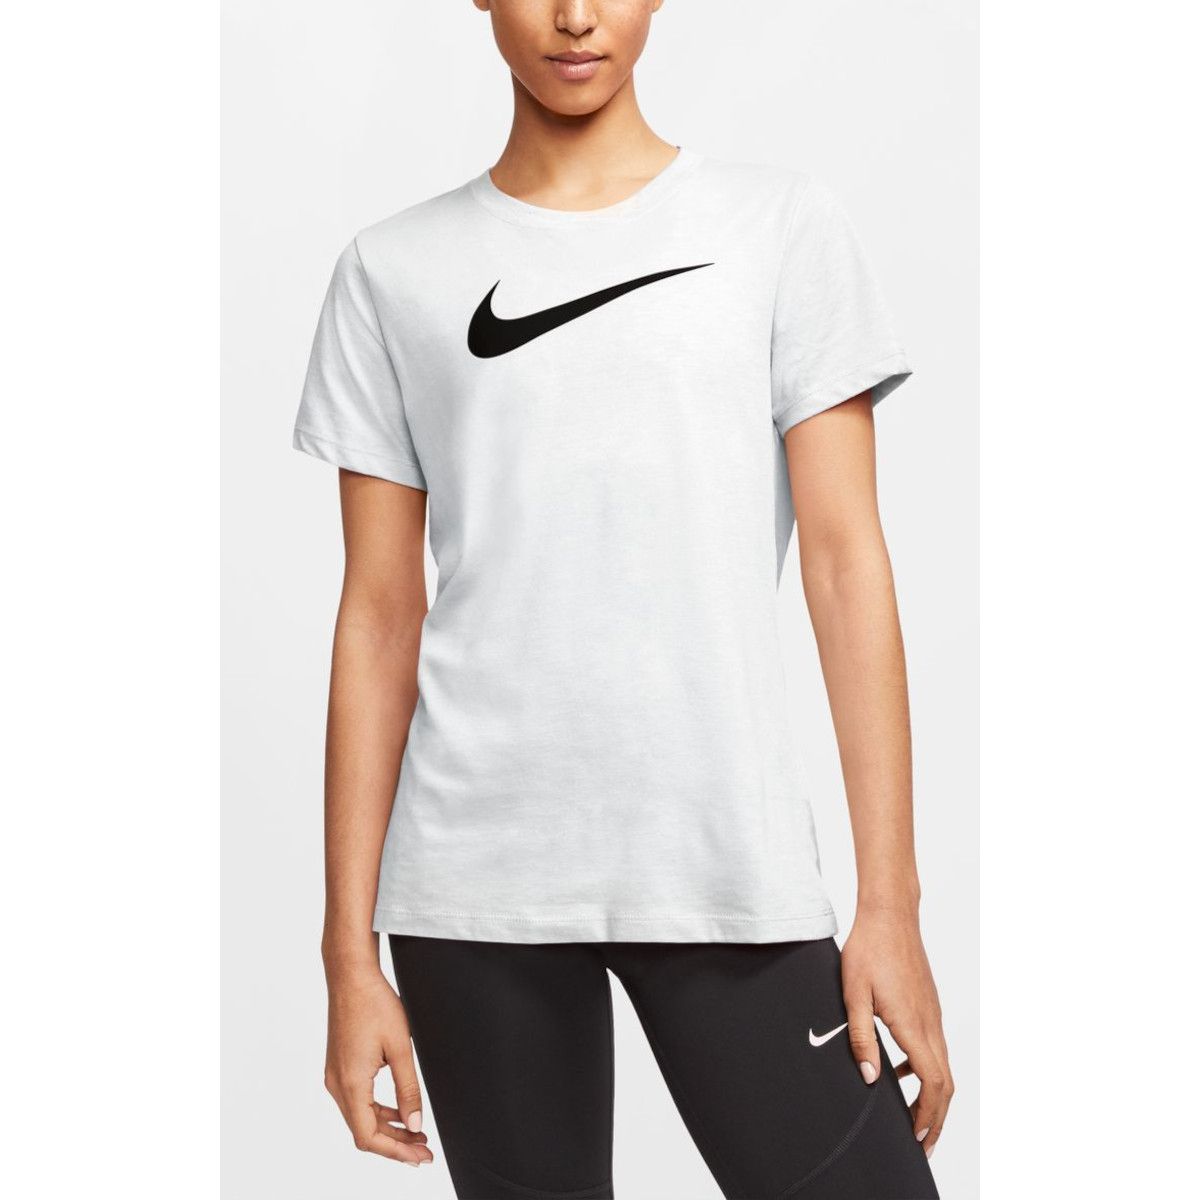 Nike Dri-FIT Women's Training T-Shirt AQ3212-100